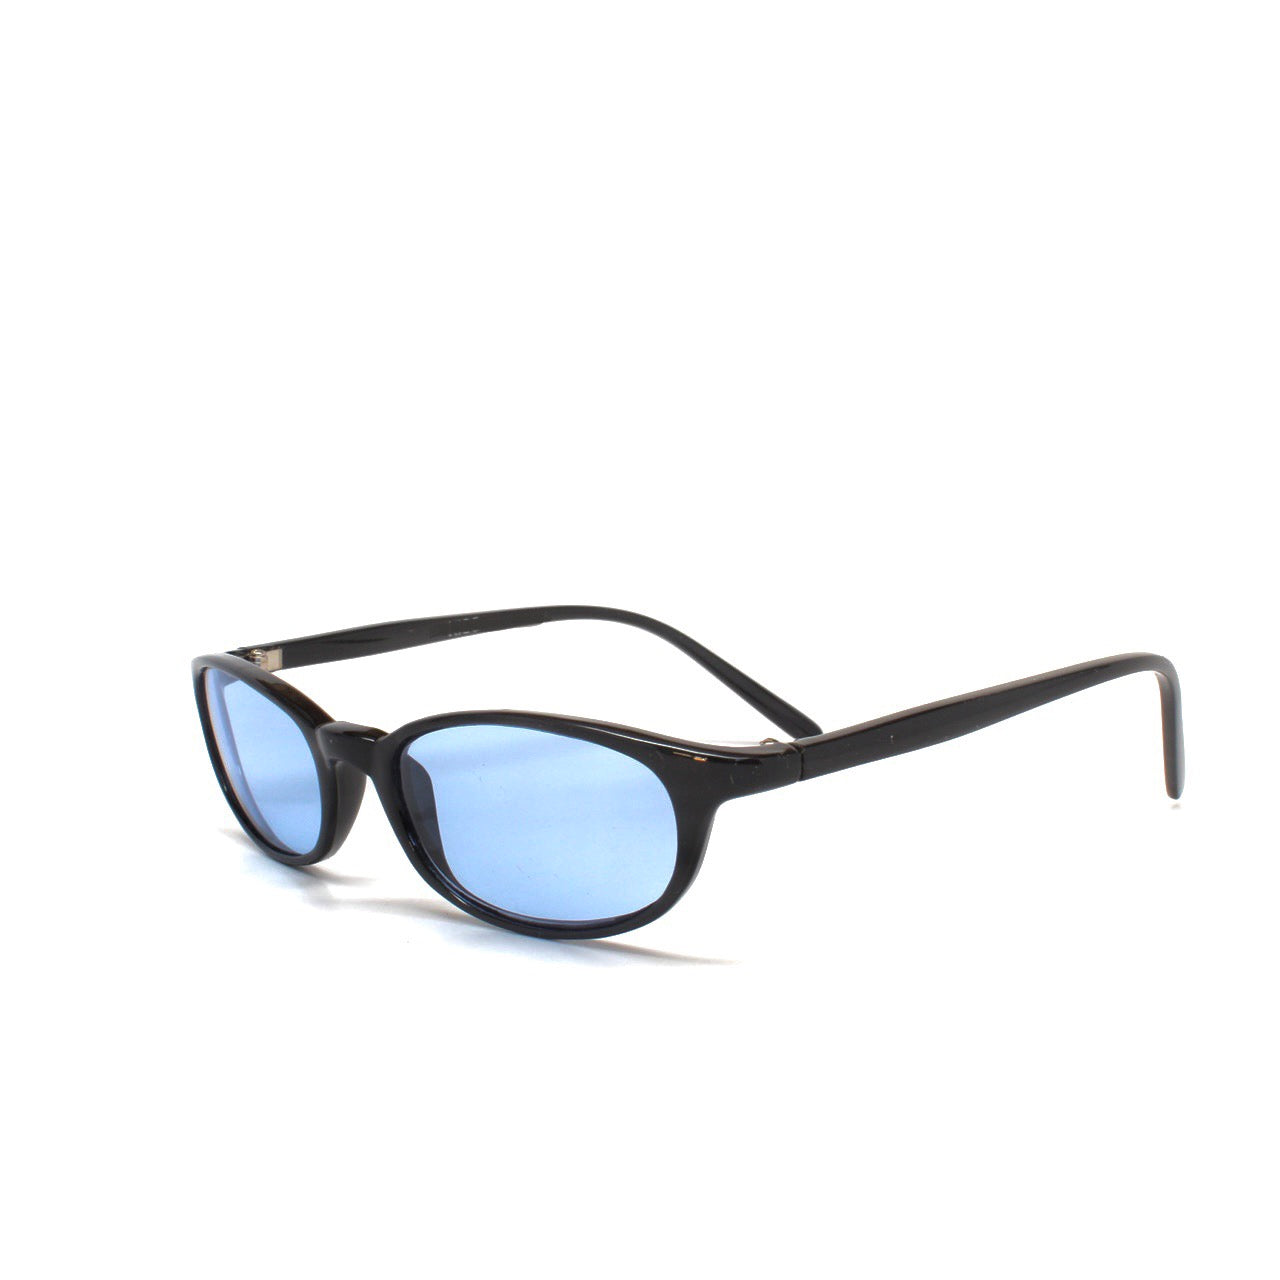 Vintage Small Size Y2k Roxbury Thin Oval Frame Sunglasses - Tortoise Blue